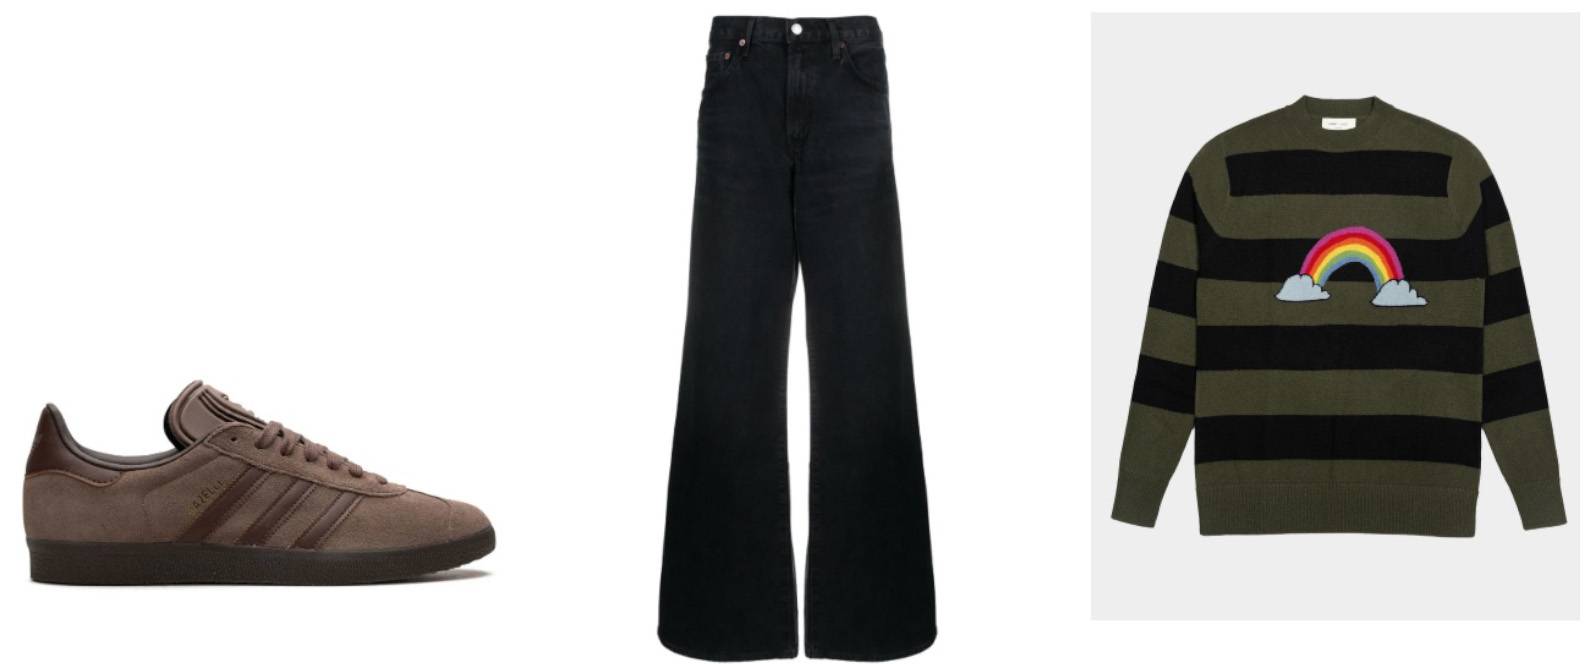 Trampki Gazelle Earth Strata, luźne jeansy marki AGOLDE, sweter,Leret Leret (Fot. Materiały prasowe)